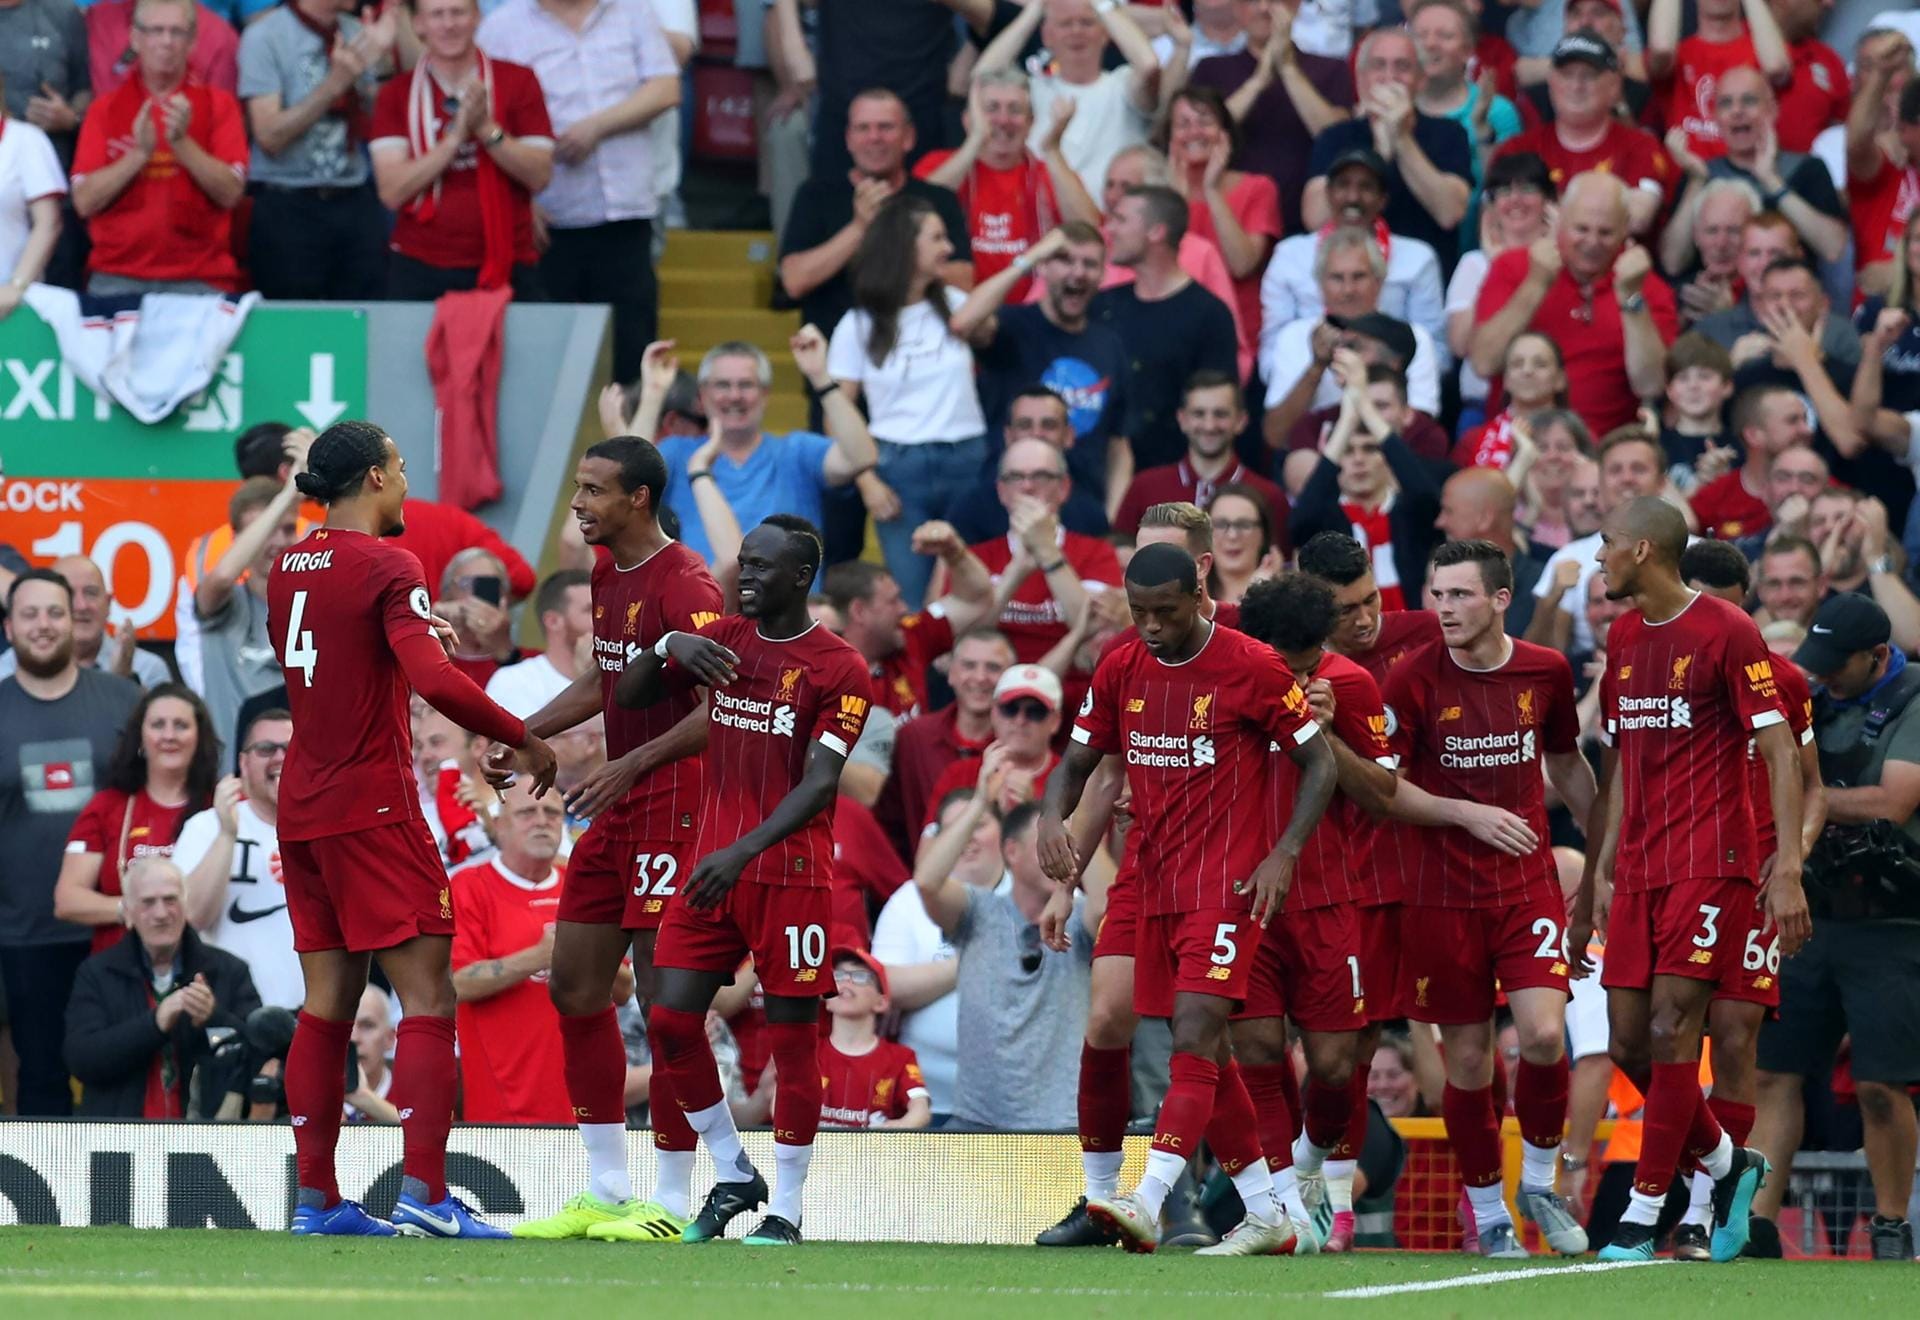 24.08.2019: FC Liverpool 3:1 FC Arsenal (3. Spieltag 19/20)